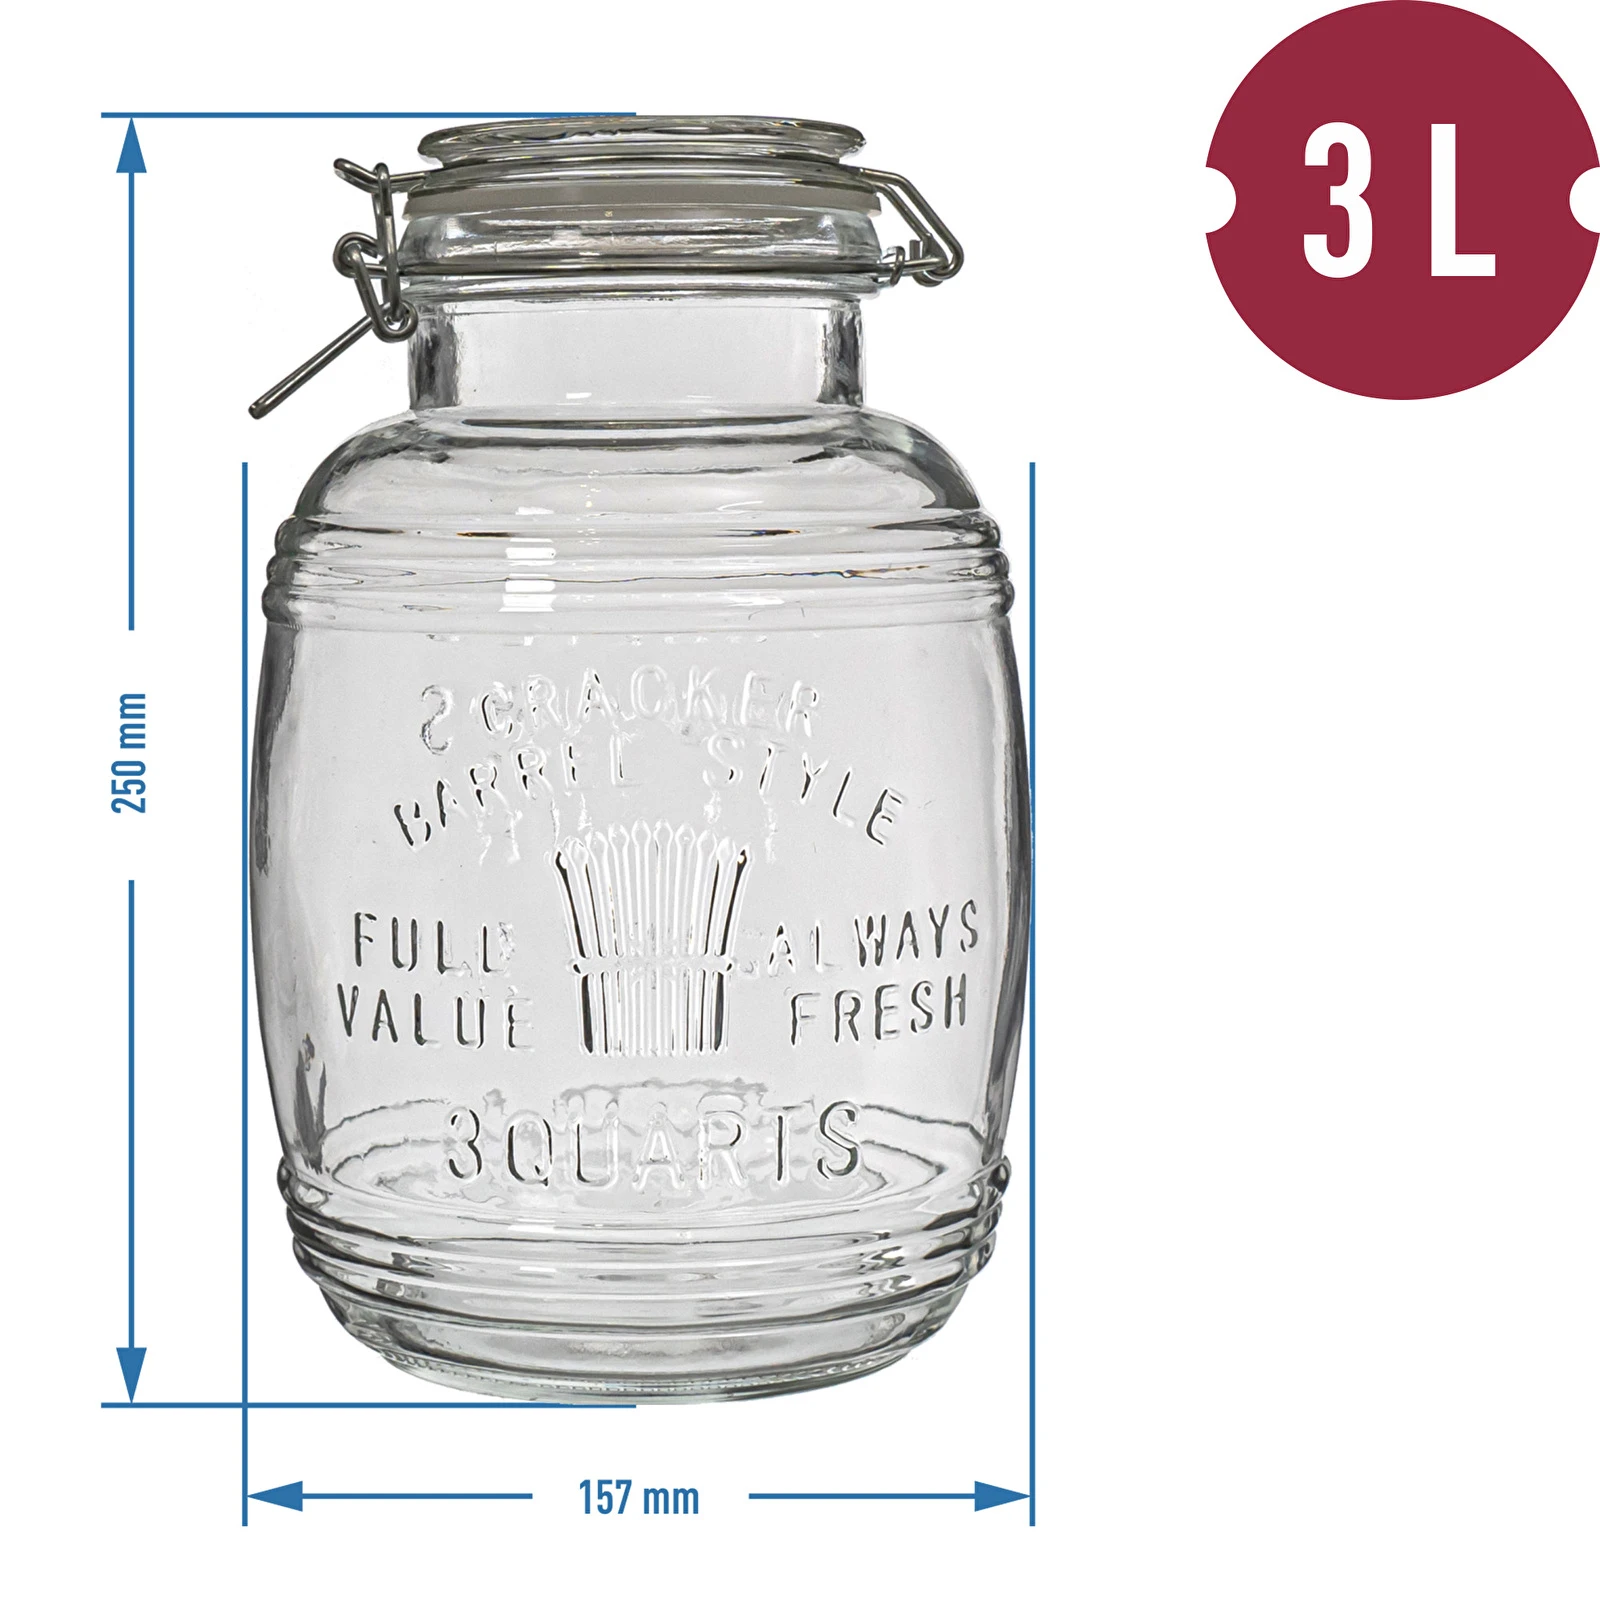 https://browin.com/static/images/1600/3l-old-barrel-glass-jar-with-clamp-lid-610330_wym.webp